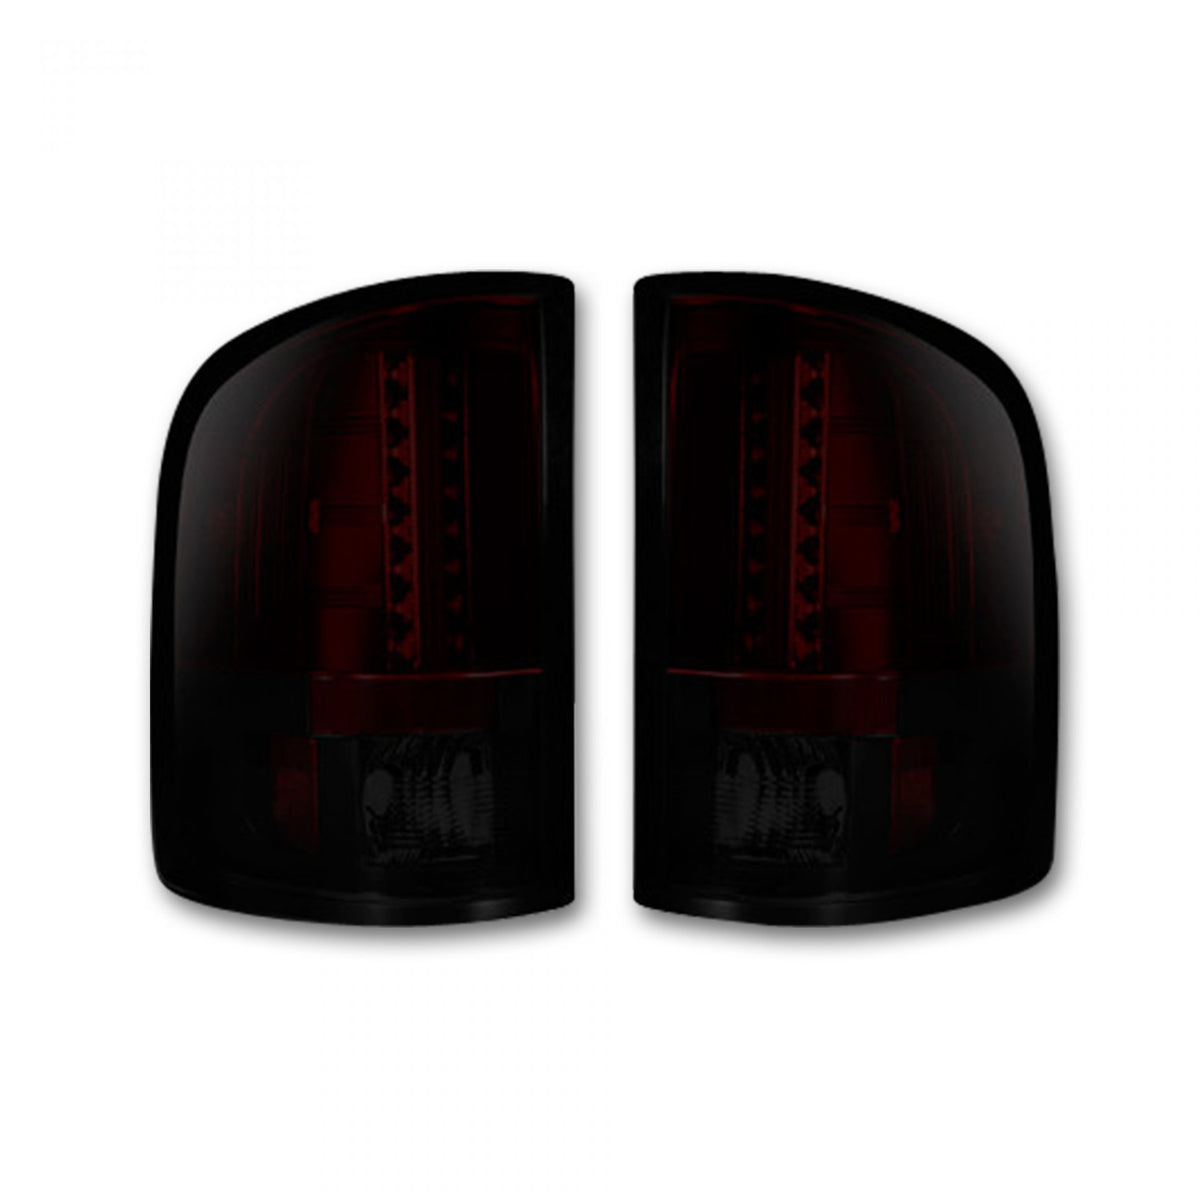 DARK RED SMOKED LED Tail Lights 07-13 GMC SIERRA 1500/2500/3500 Single Wheel ONLY